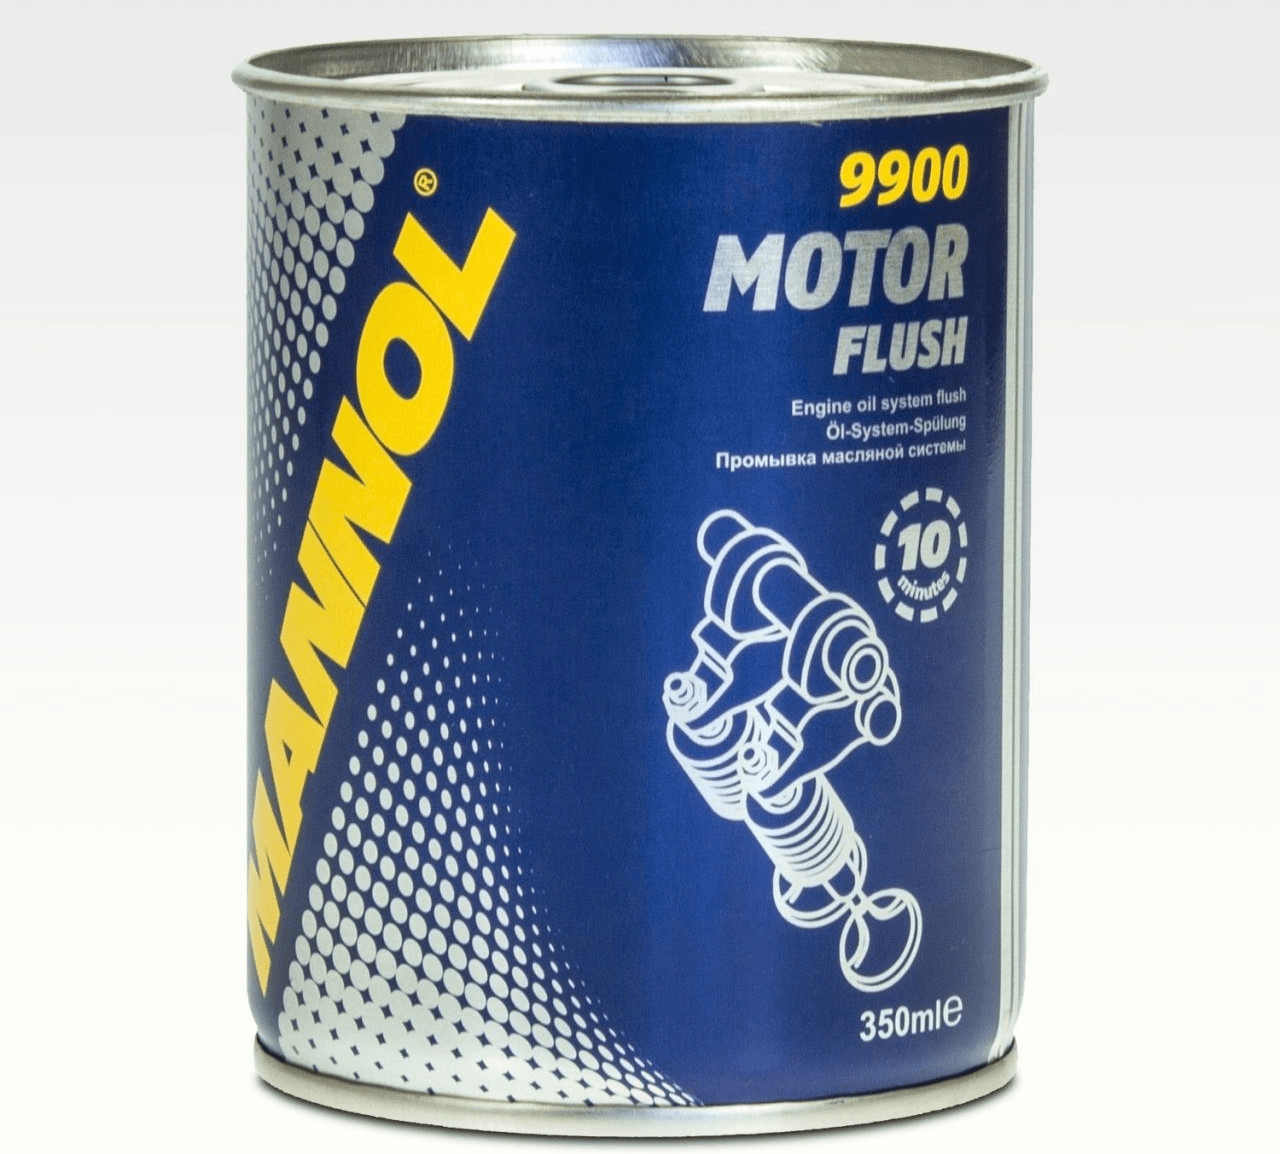 Mannol Motor Flush ab 9,45 €